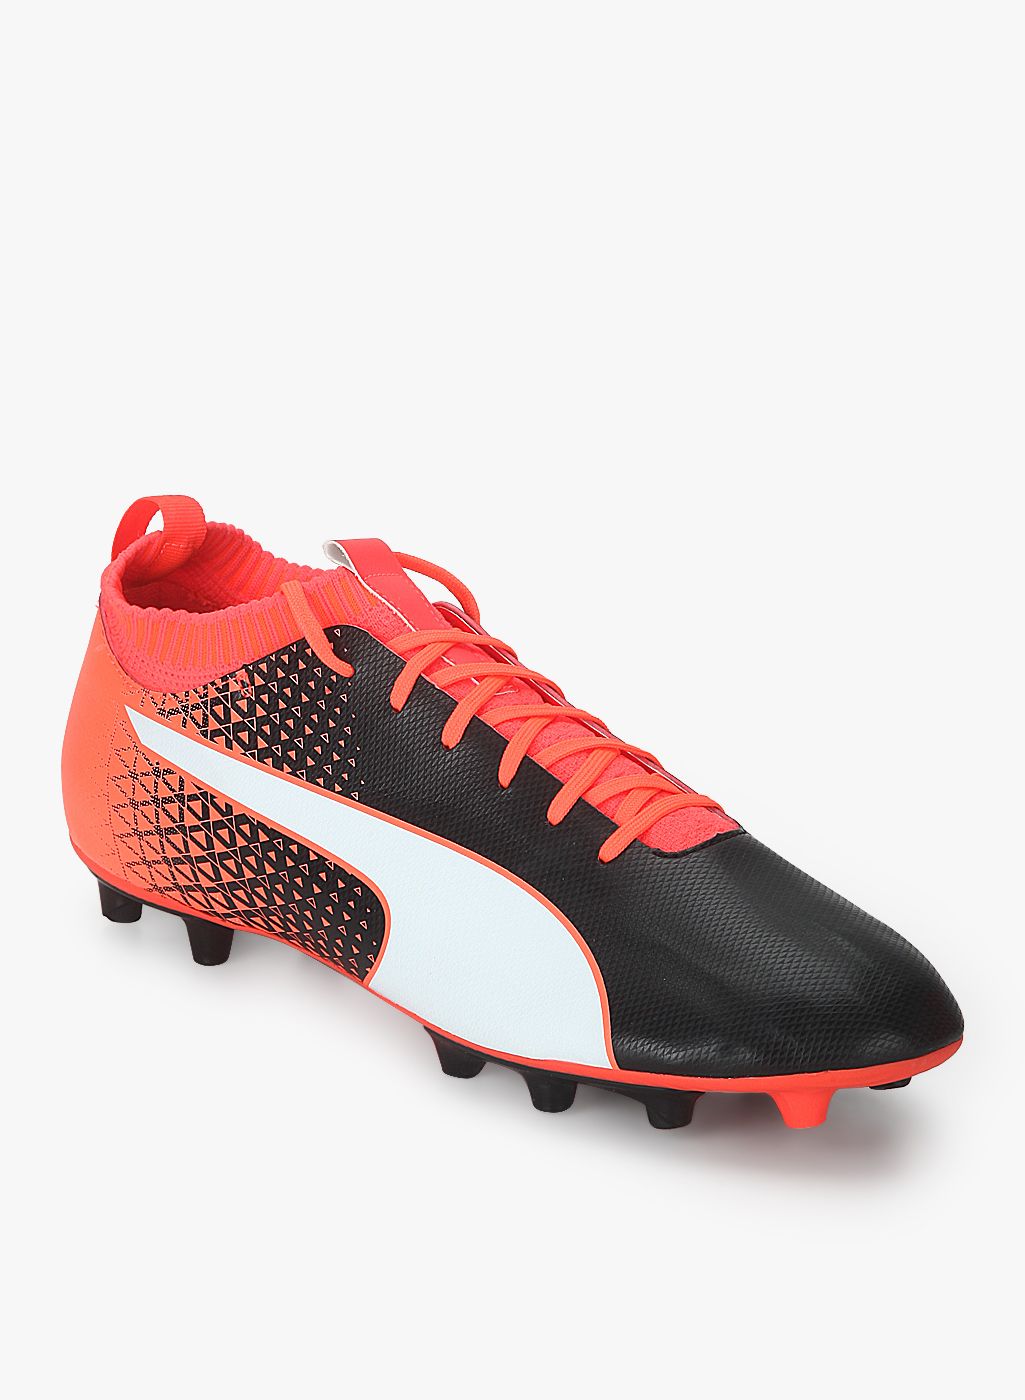 football shoes of puma